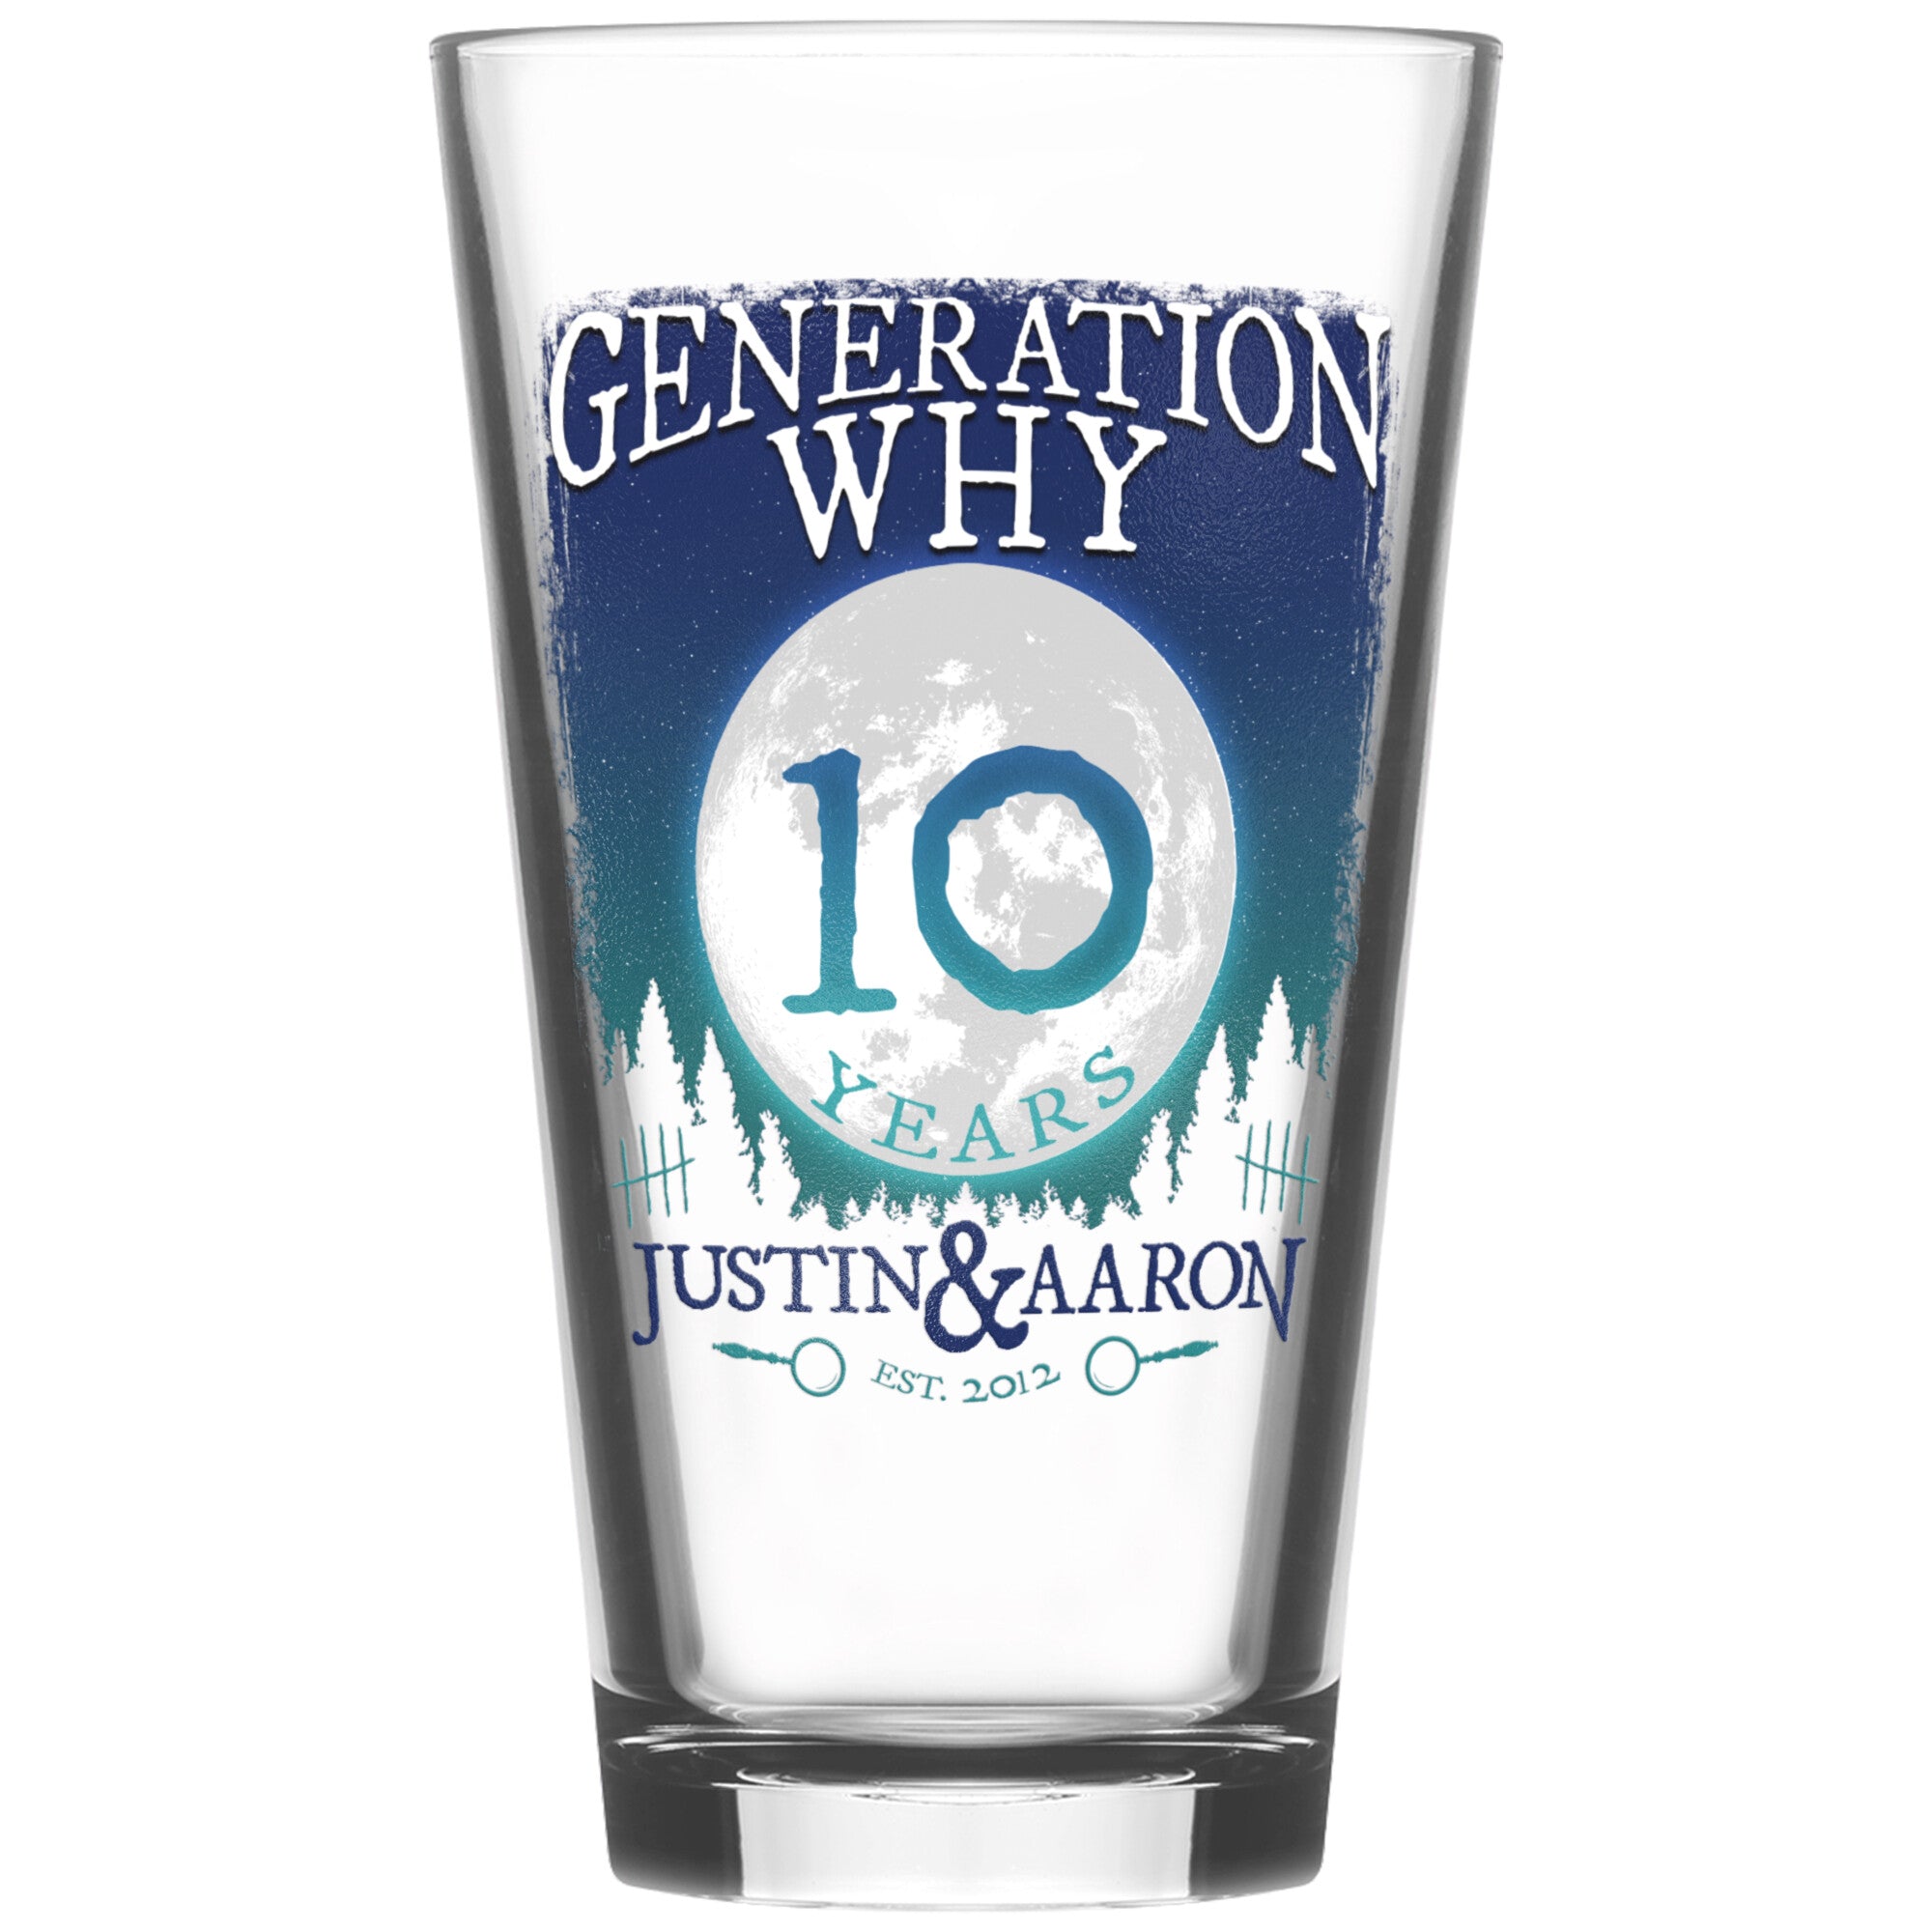 Ten Year Anniversary 16oz Pint Glass